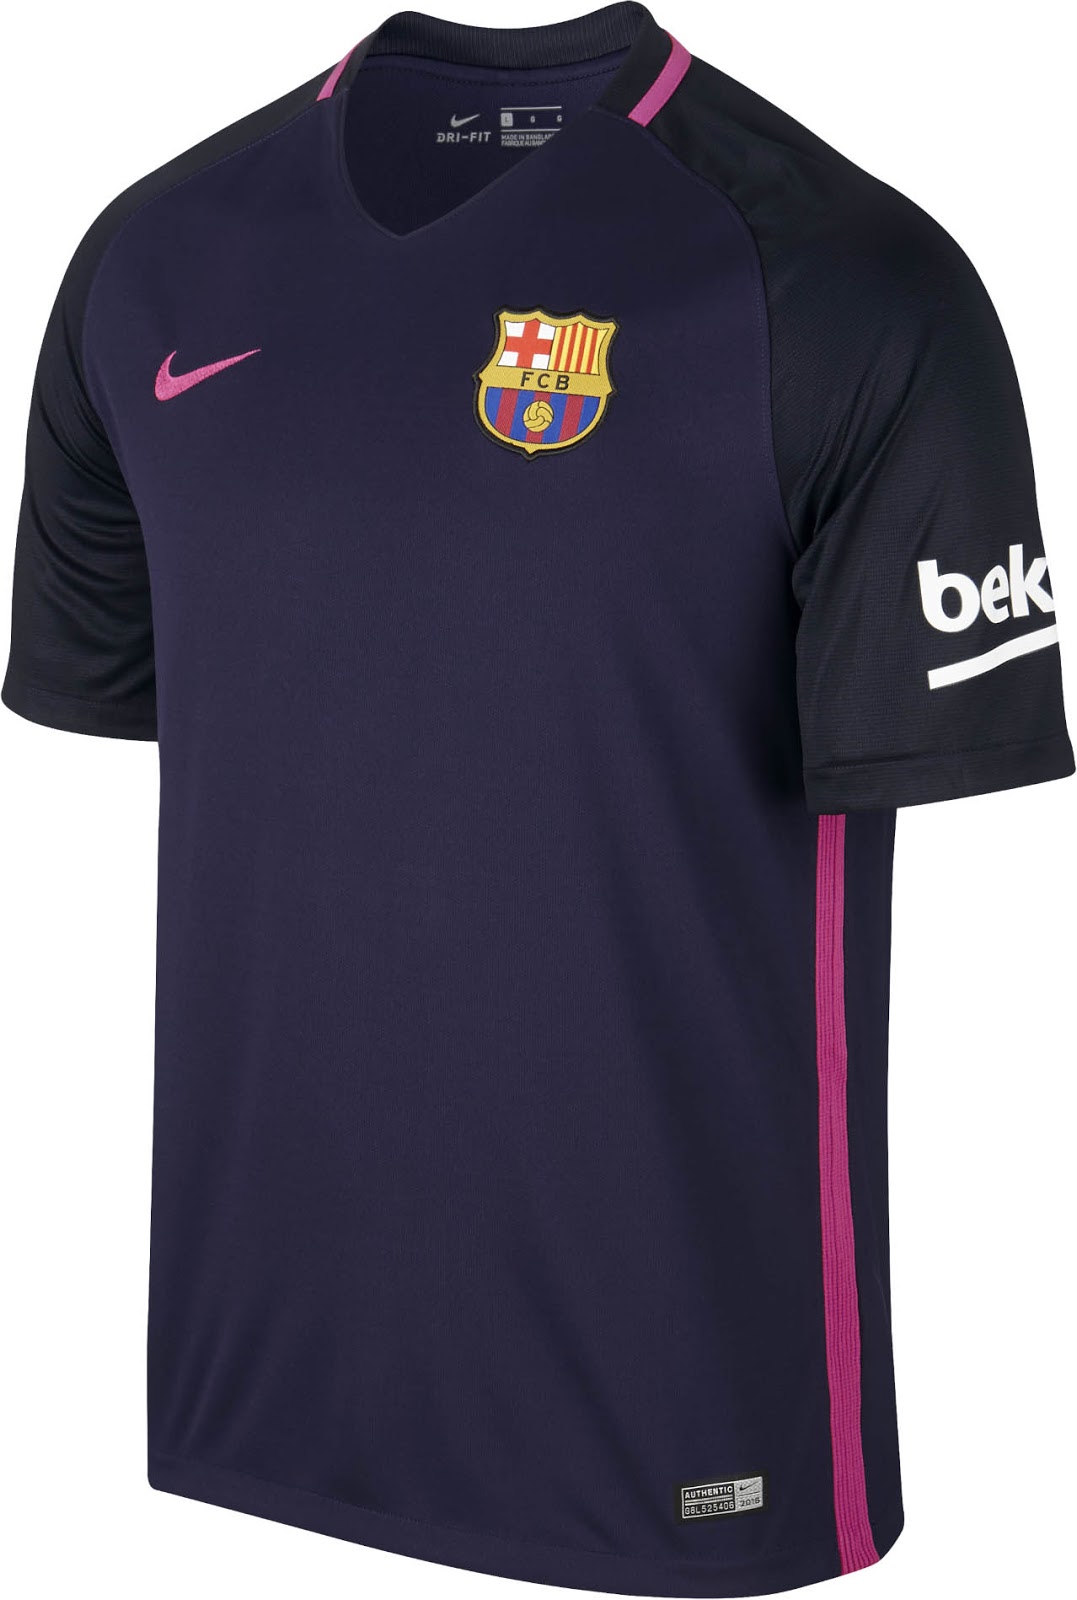 Barcelona Away Kit 2016-17 Shirt